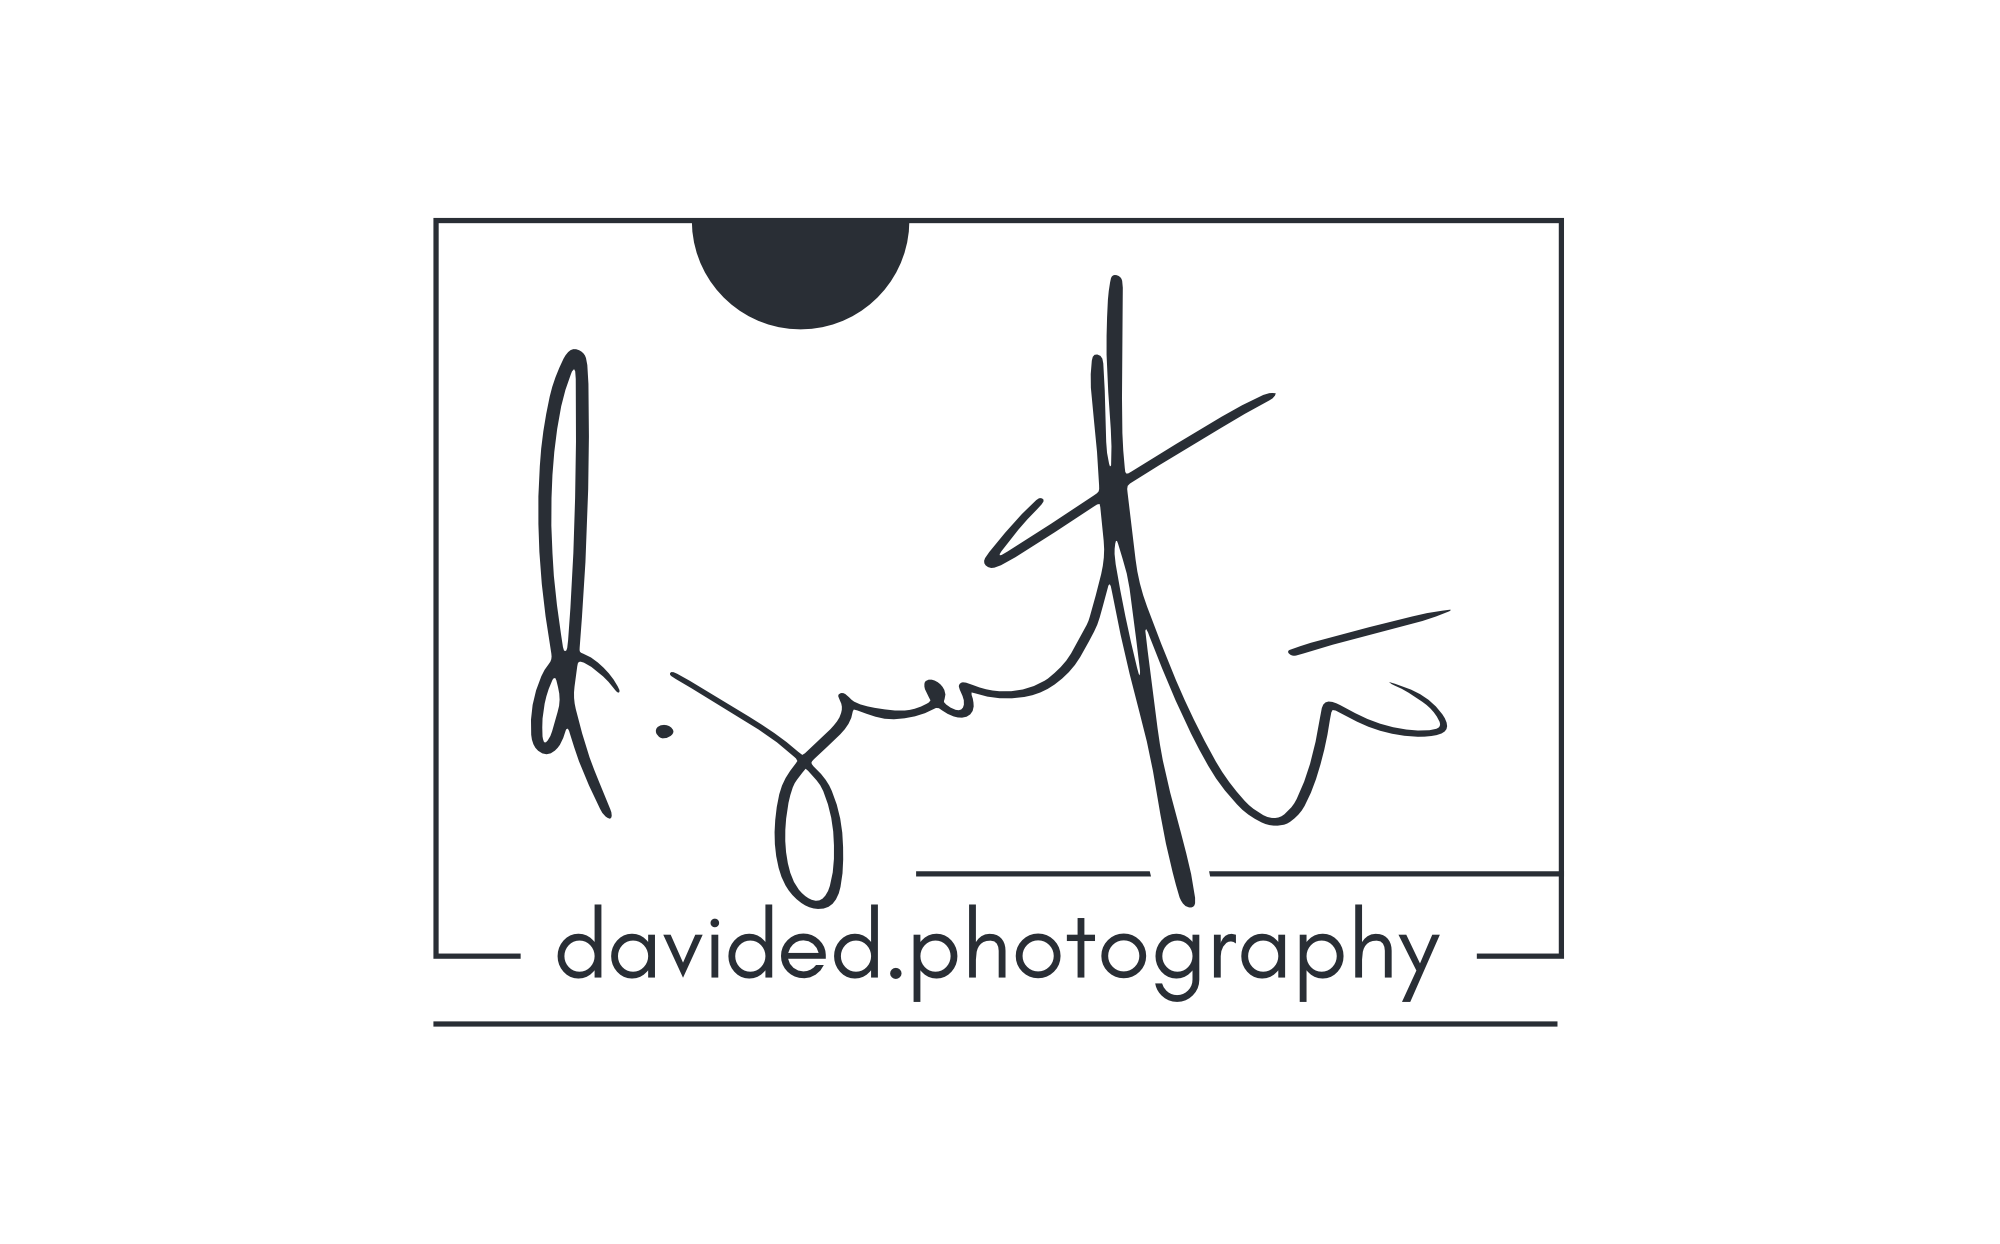 davided_photography.logo